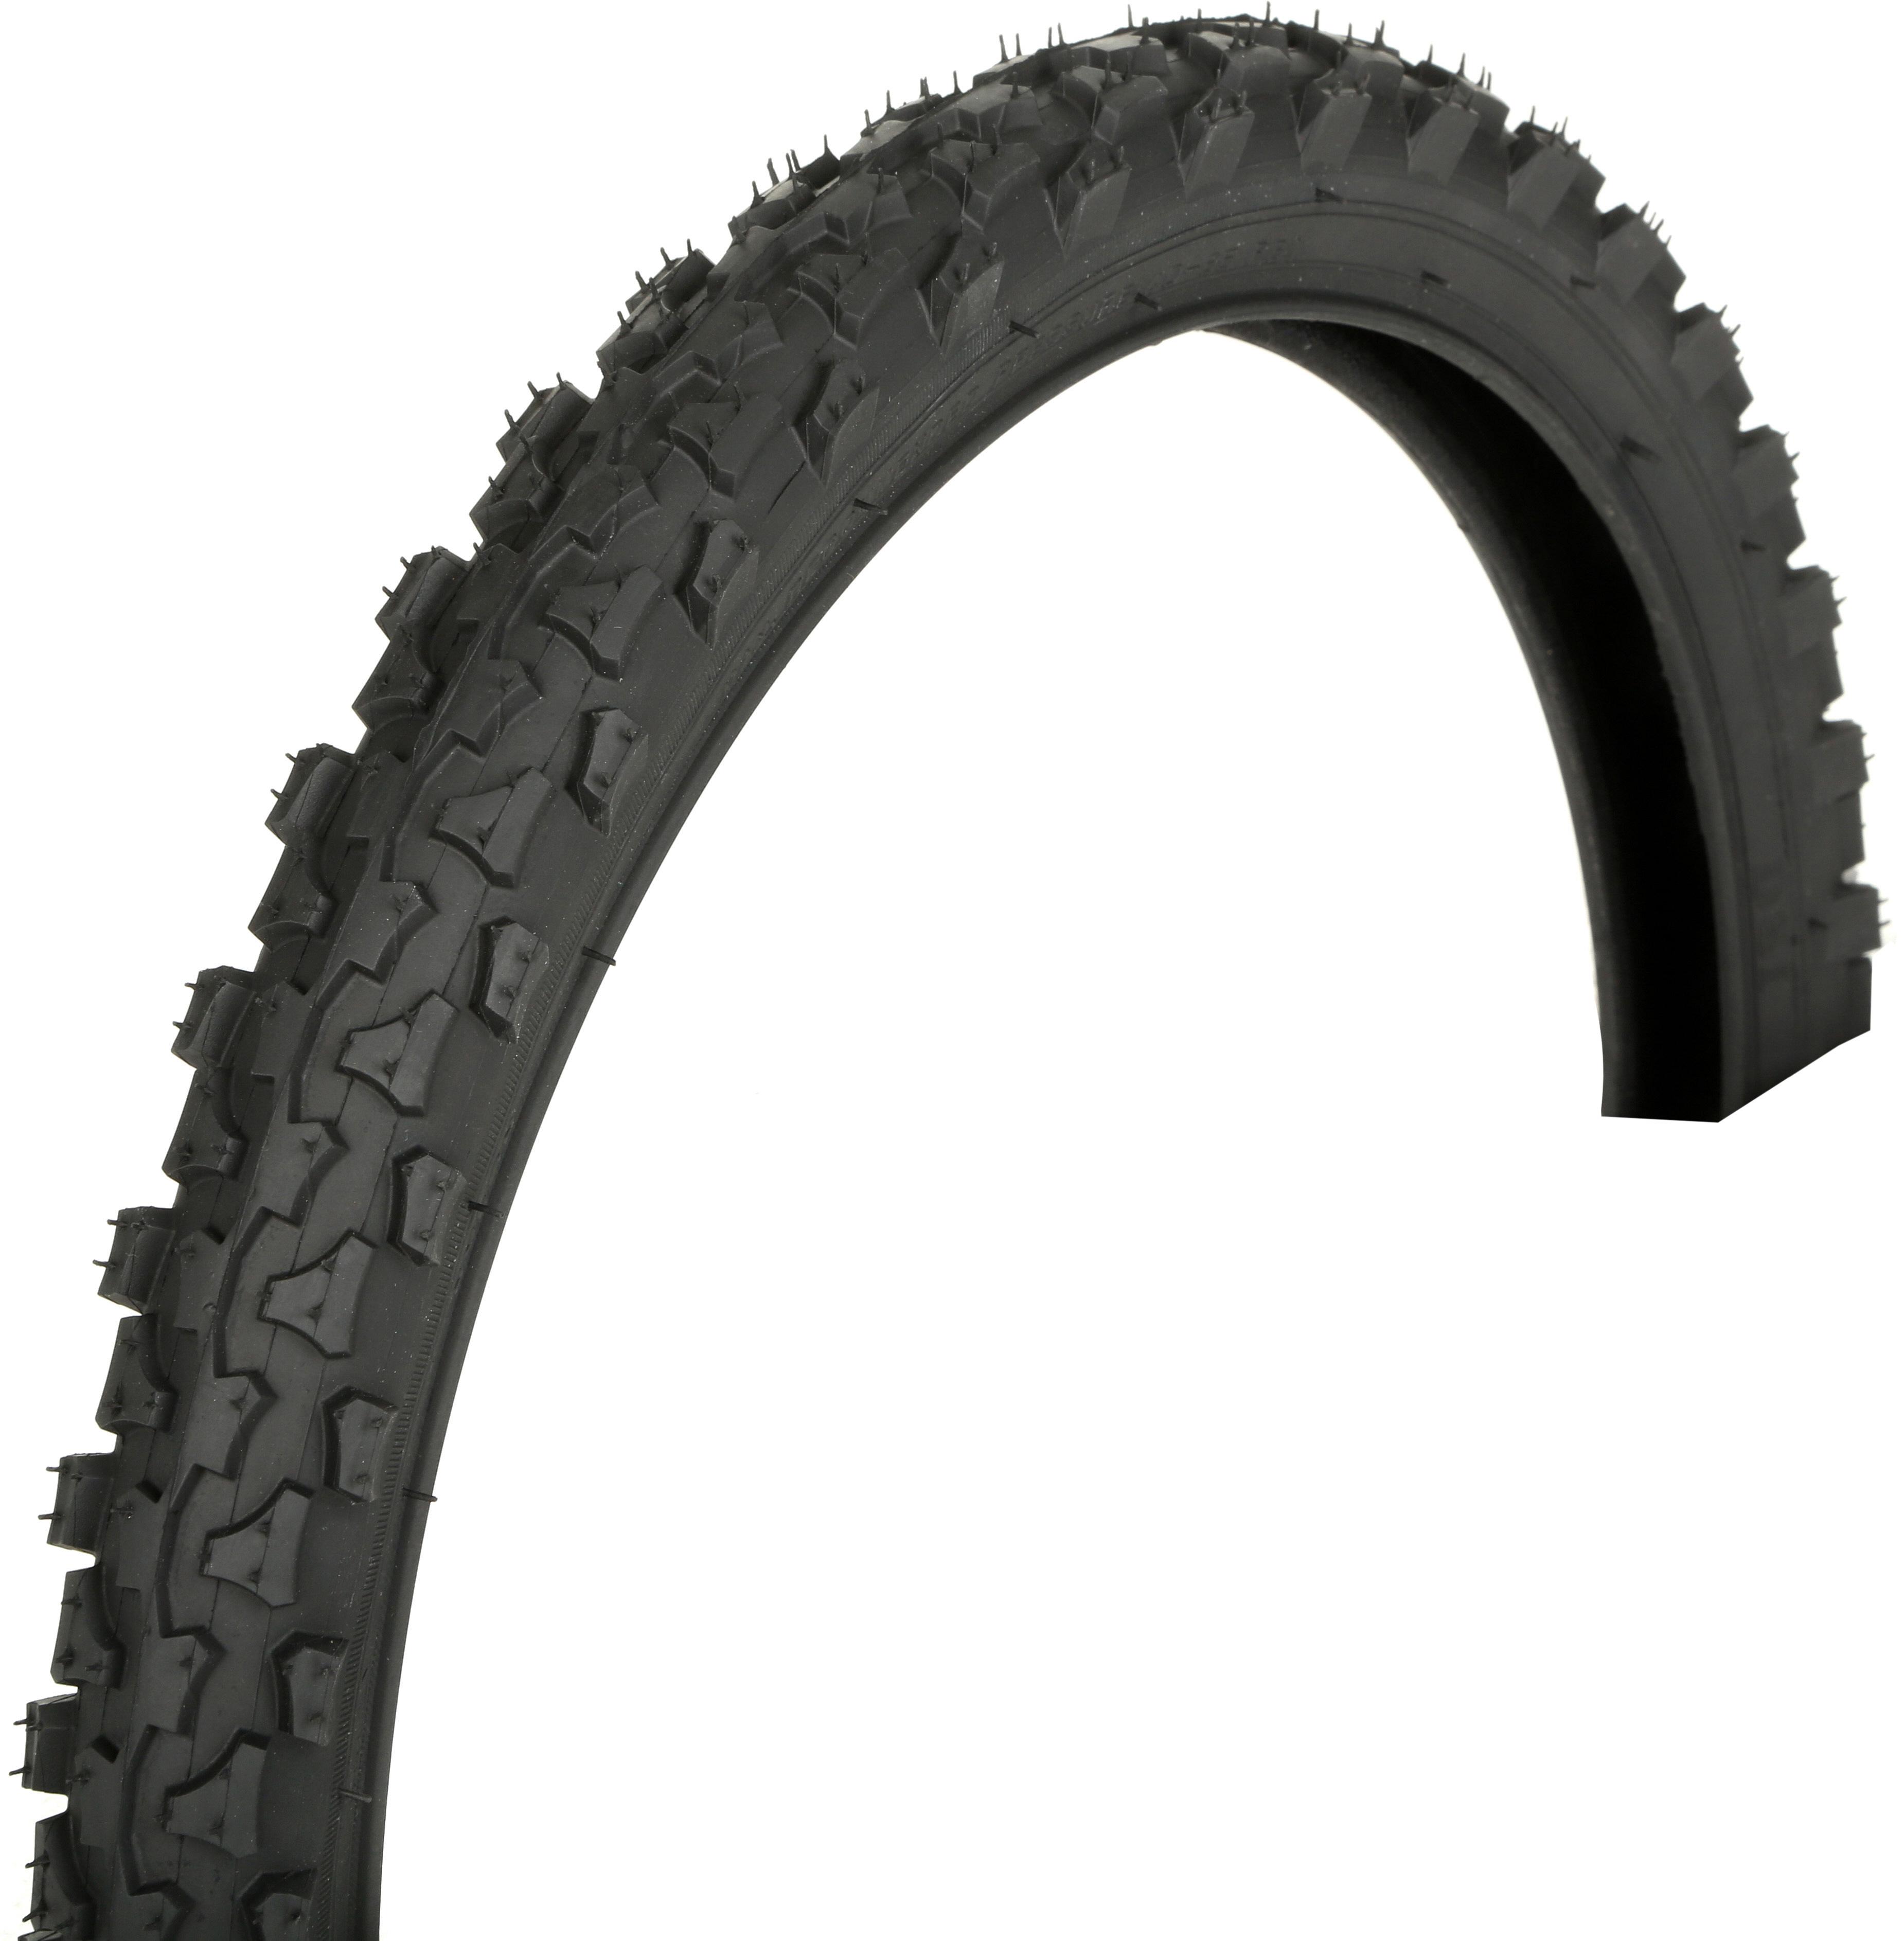 20 inch bike tires target